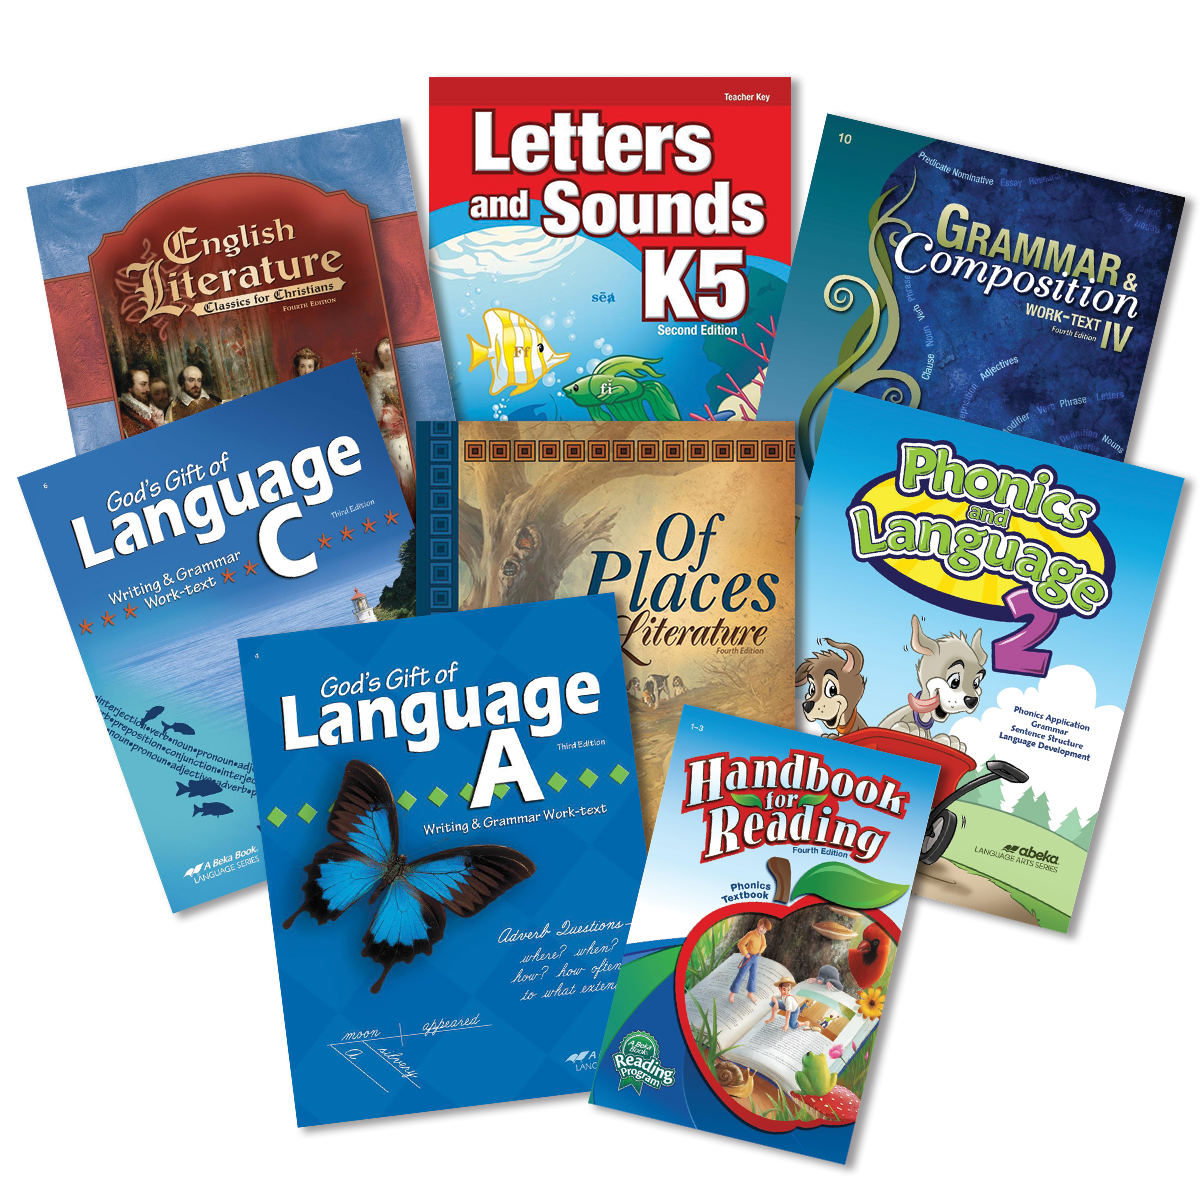 Language Arts books